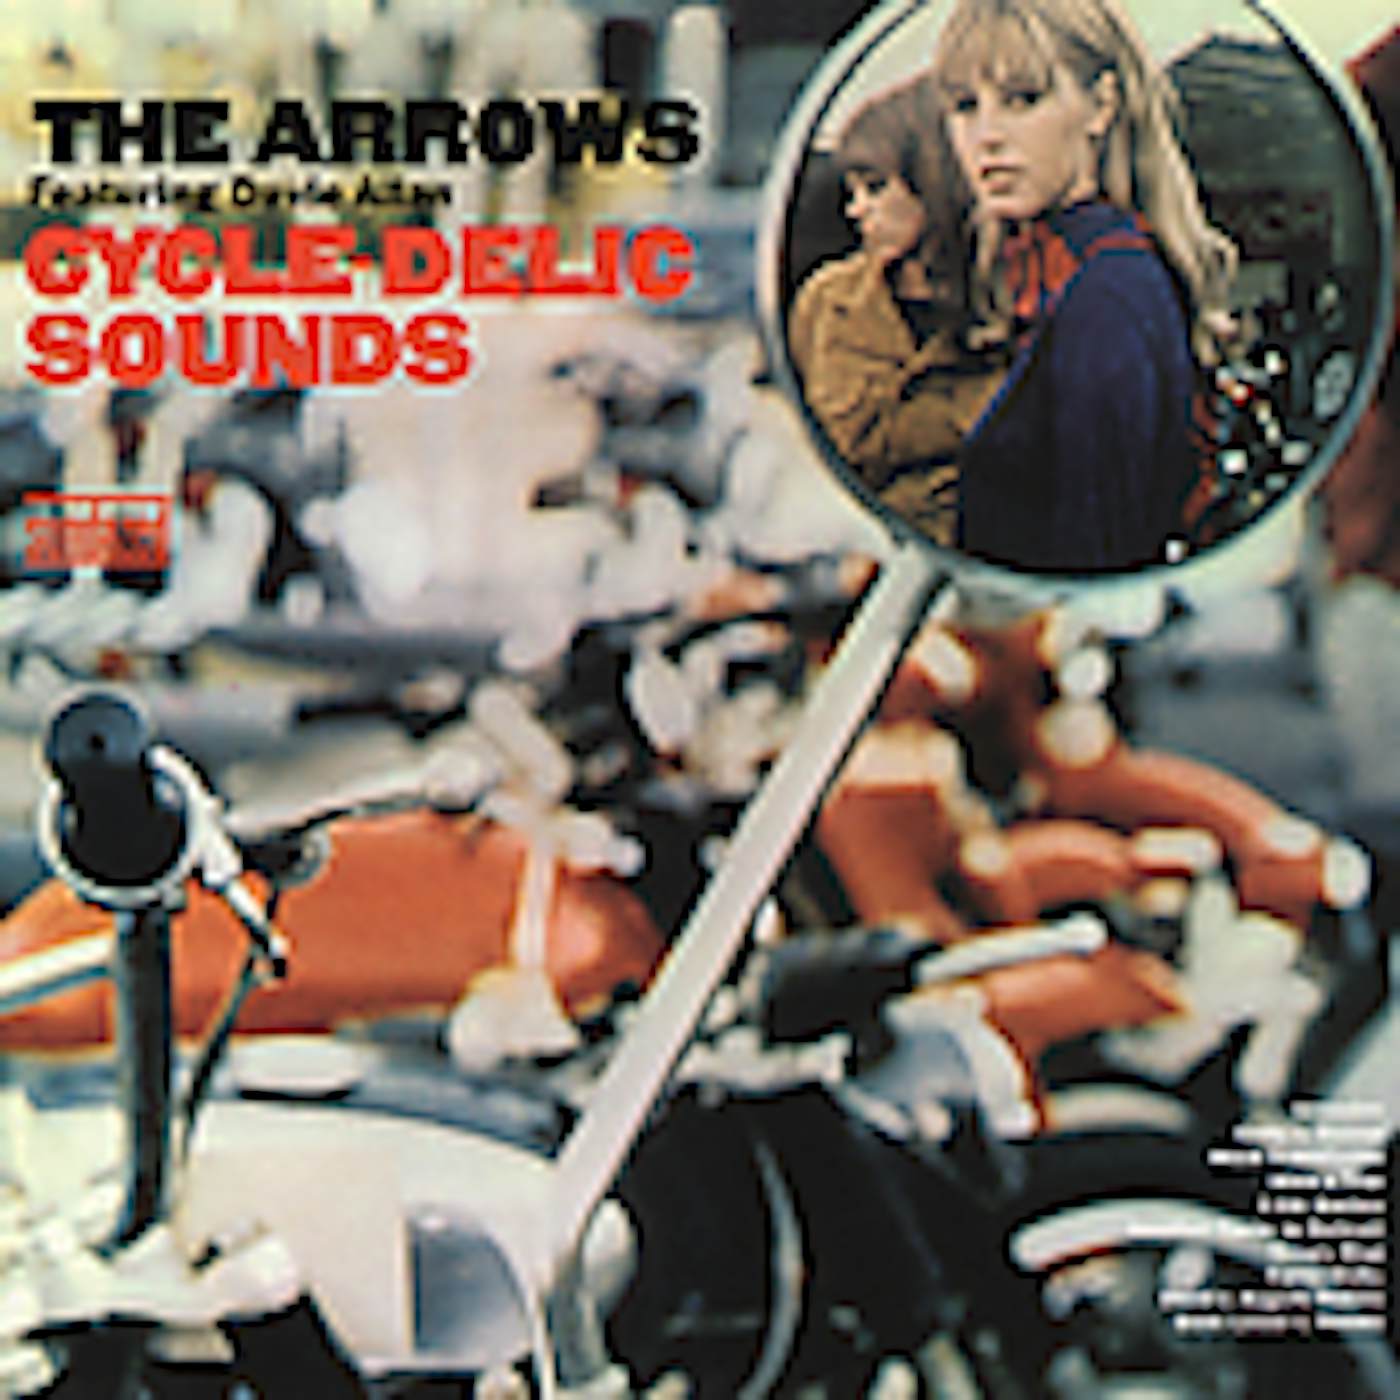 Davie Allan & The Arrows CYCLE DELIC SOUNDS OF CD